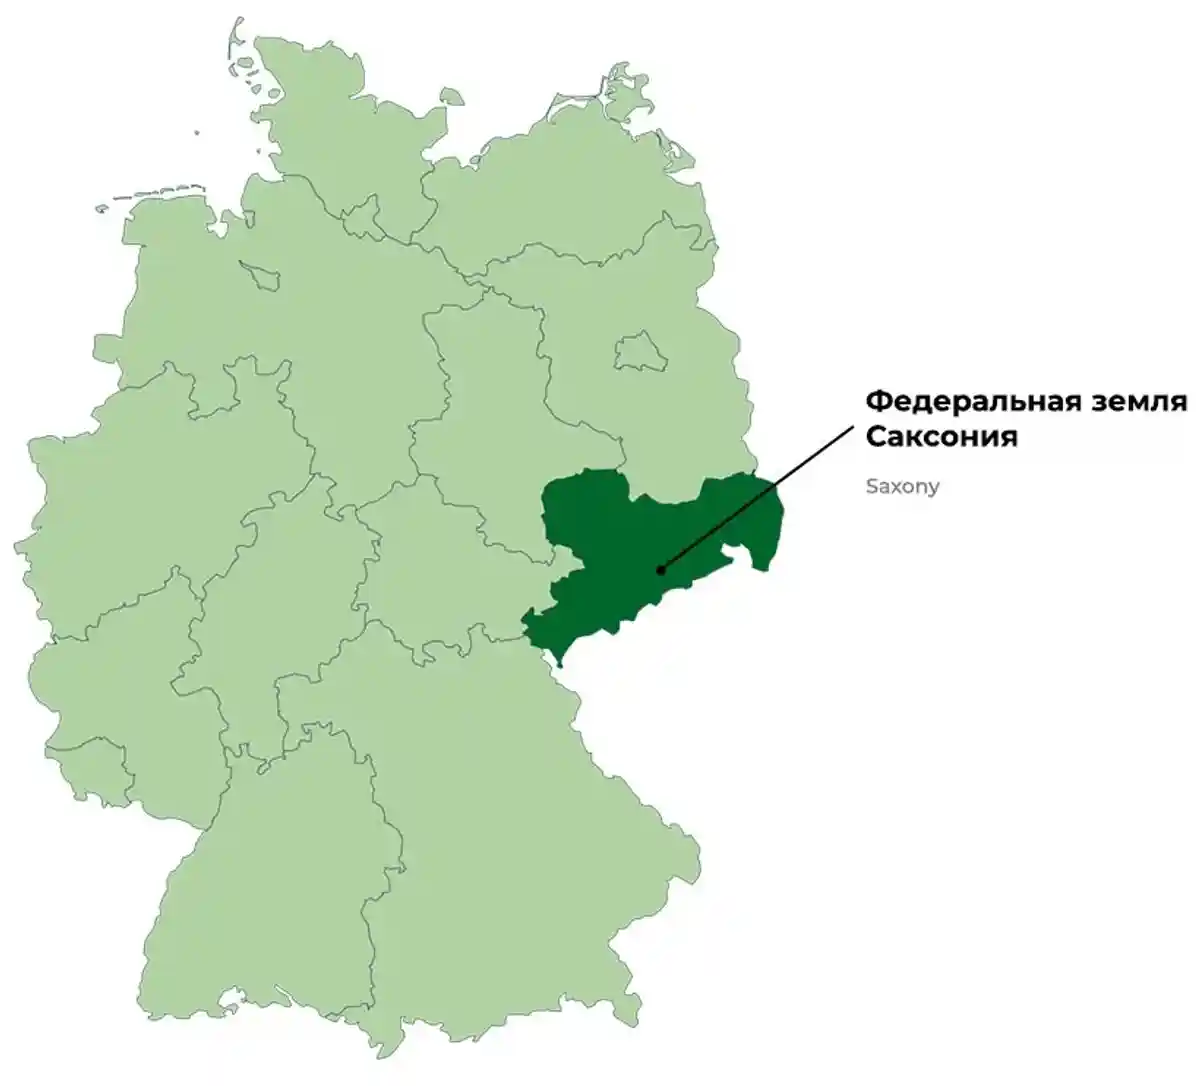 Федеральная земля Саксония на карте.